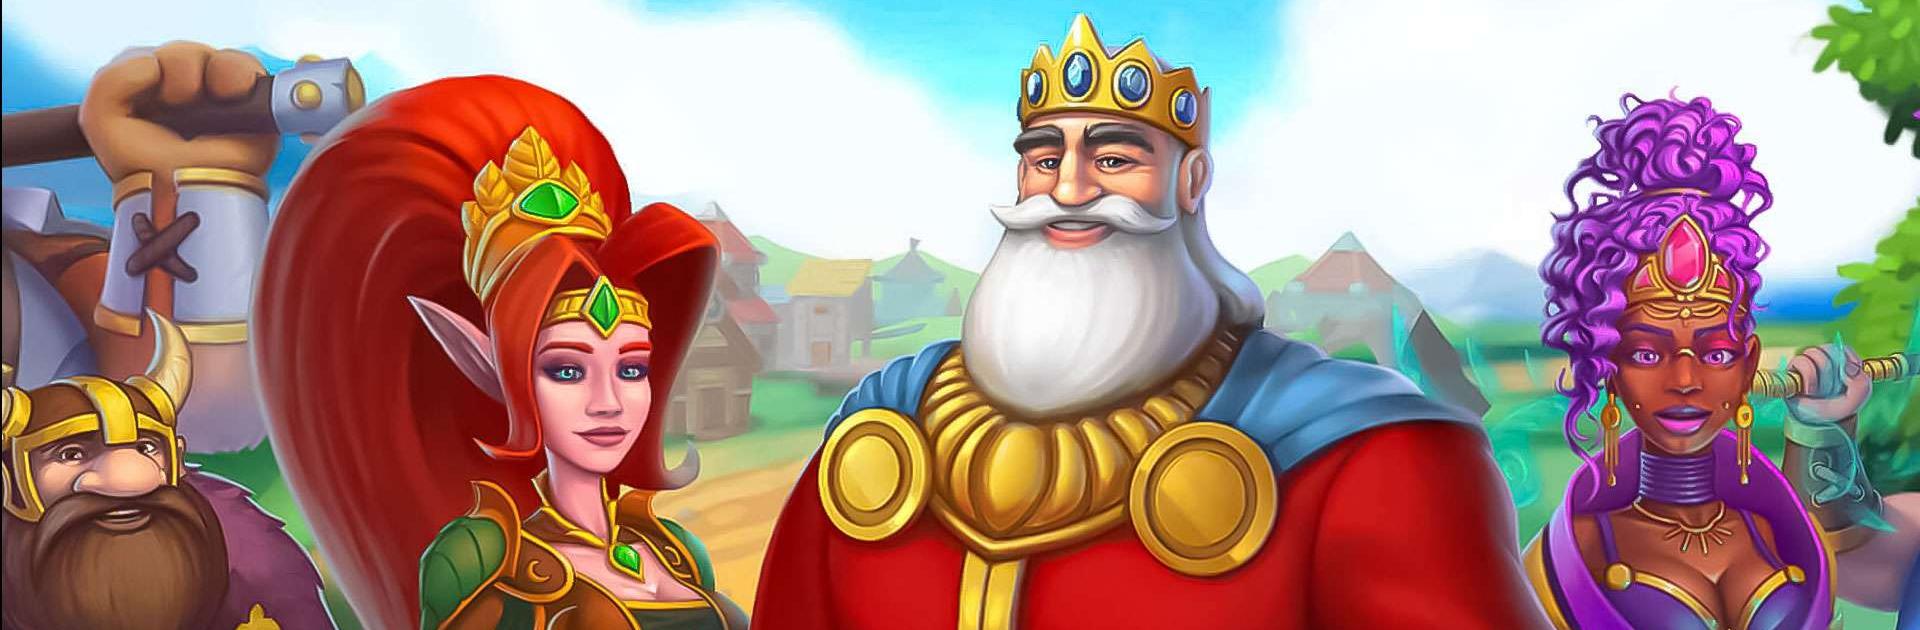 Mergest Kingdom: Merge game